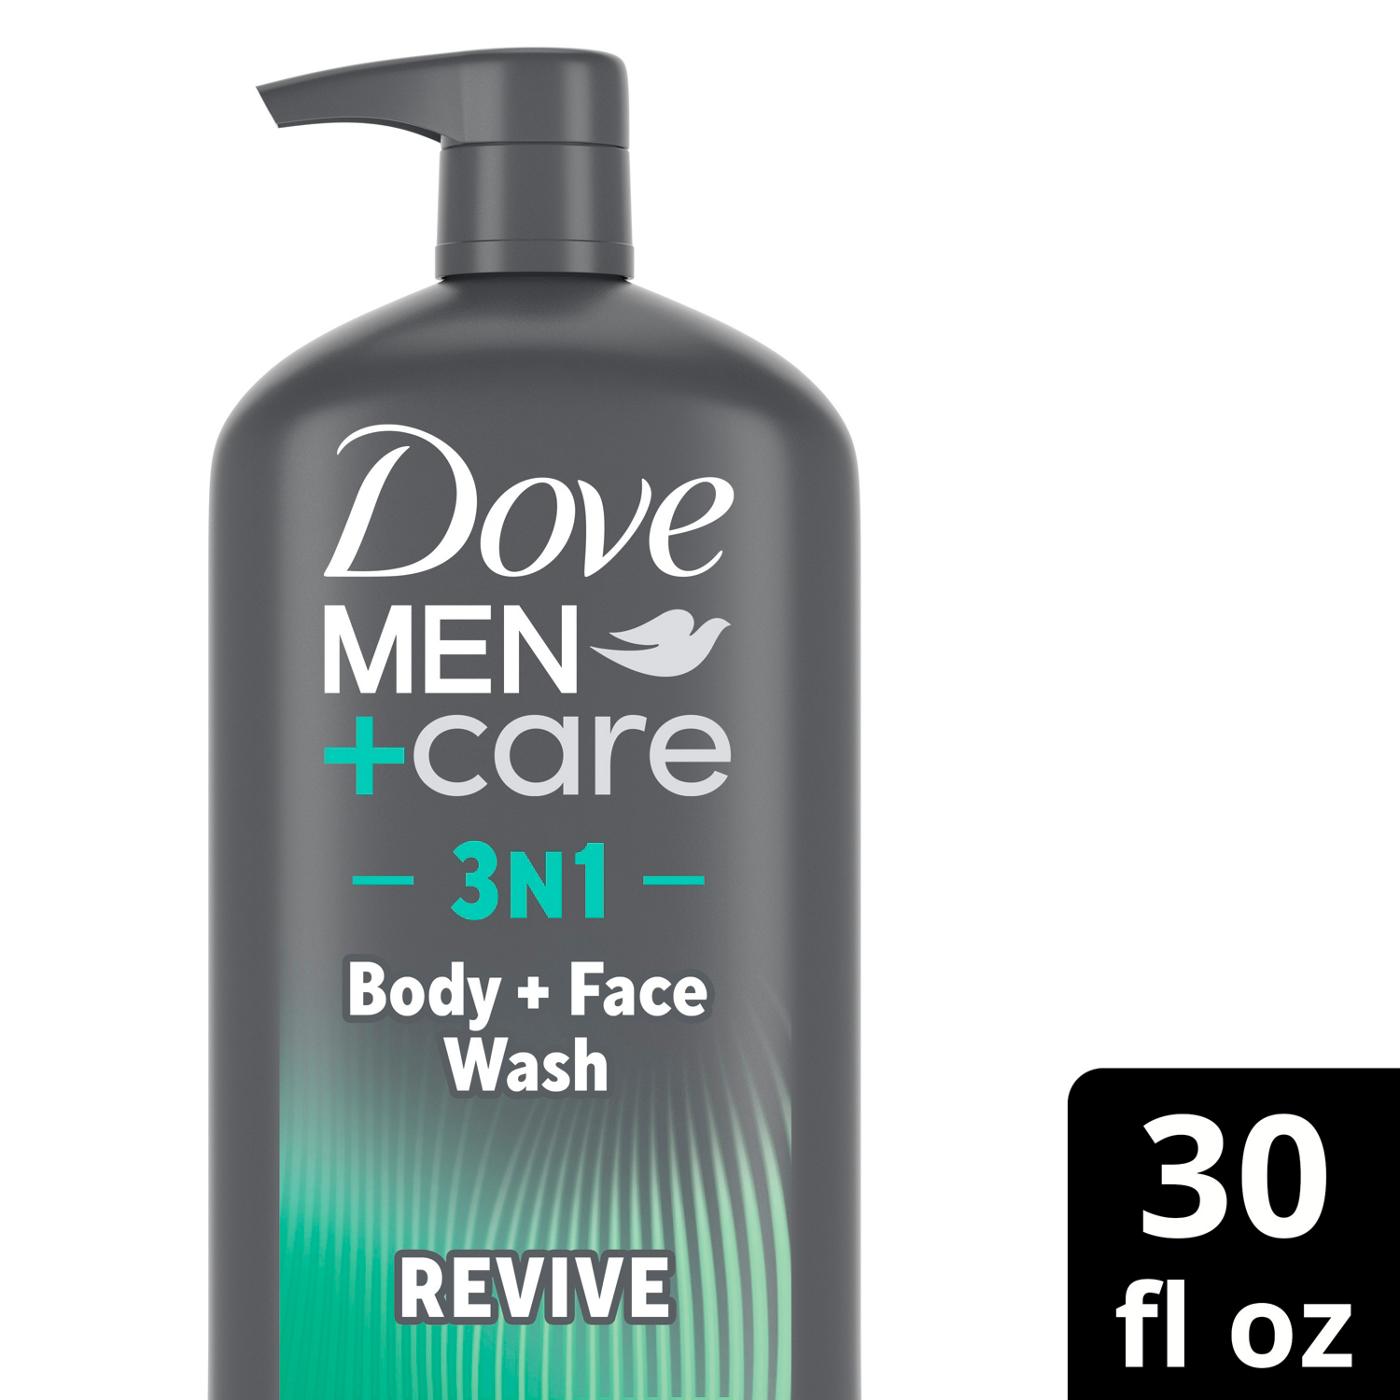 Dove Men+Care Revive  3 N 1 Body Wash - Tea Tree; image 5 of 5